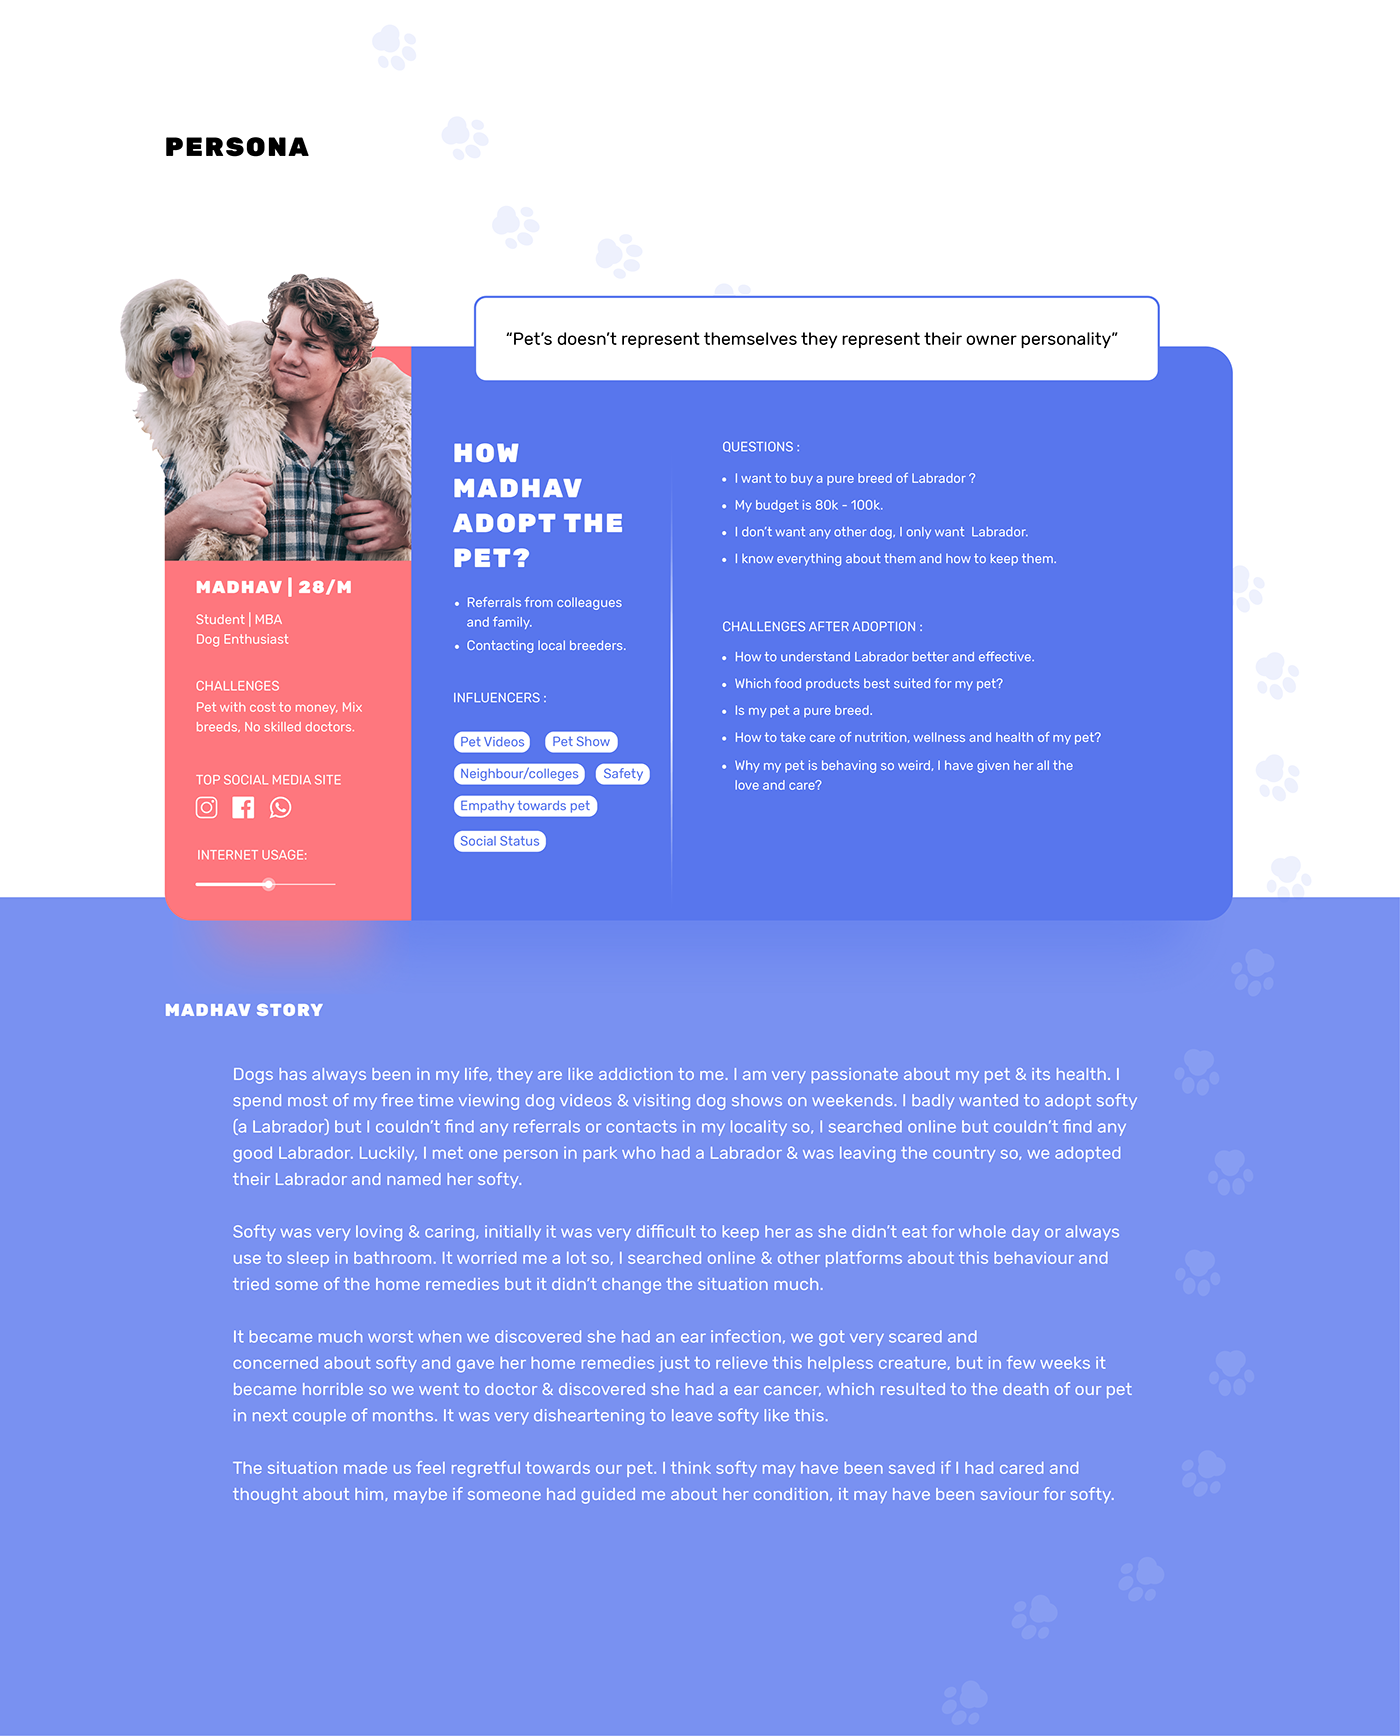 adobeawards petapplication uxdesign uidesign xD Illustrator Pet dog application app